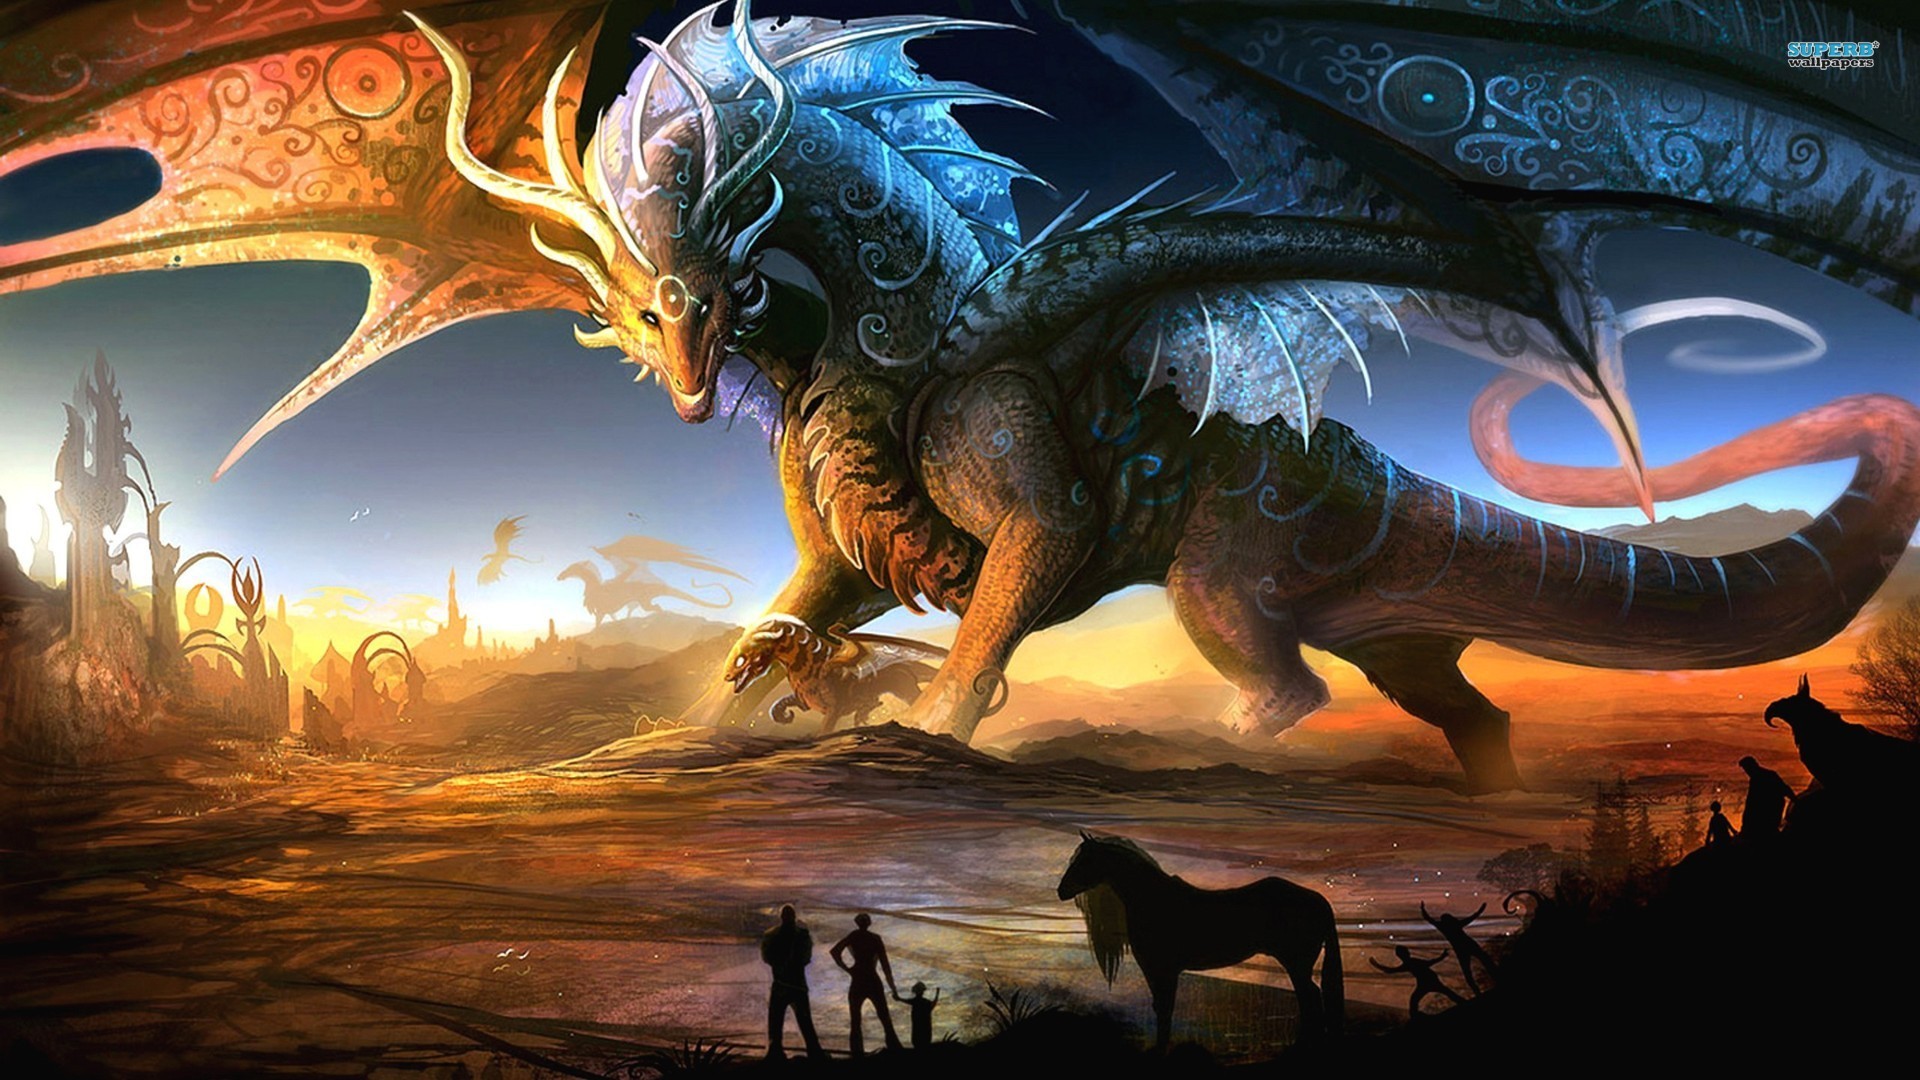 Power Dragon Background Desktop Wallpaper High Definition